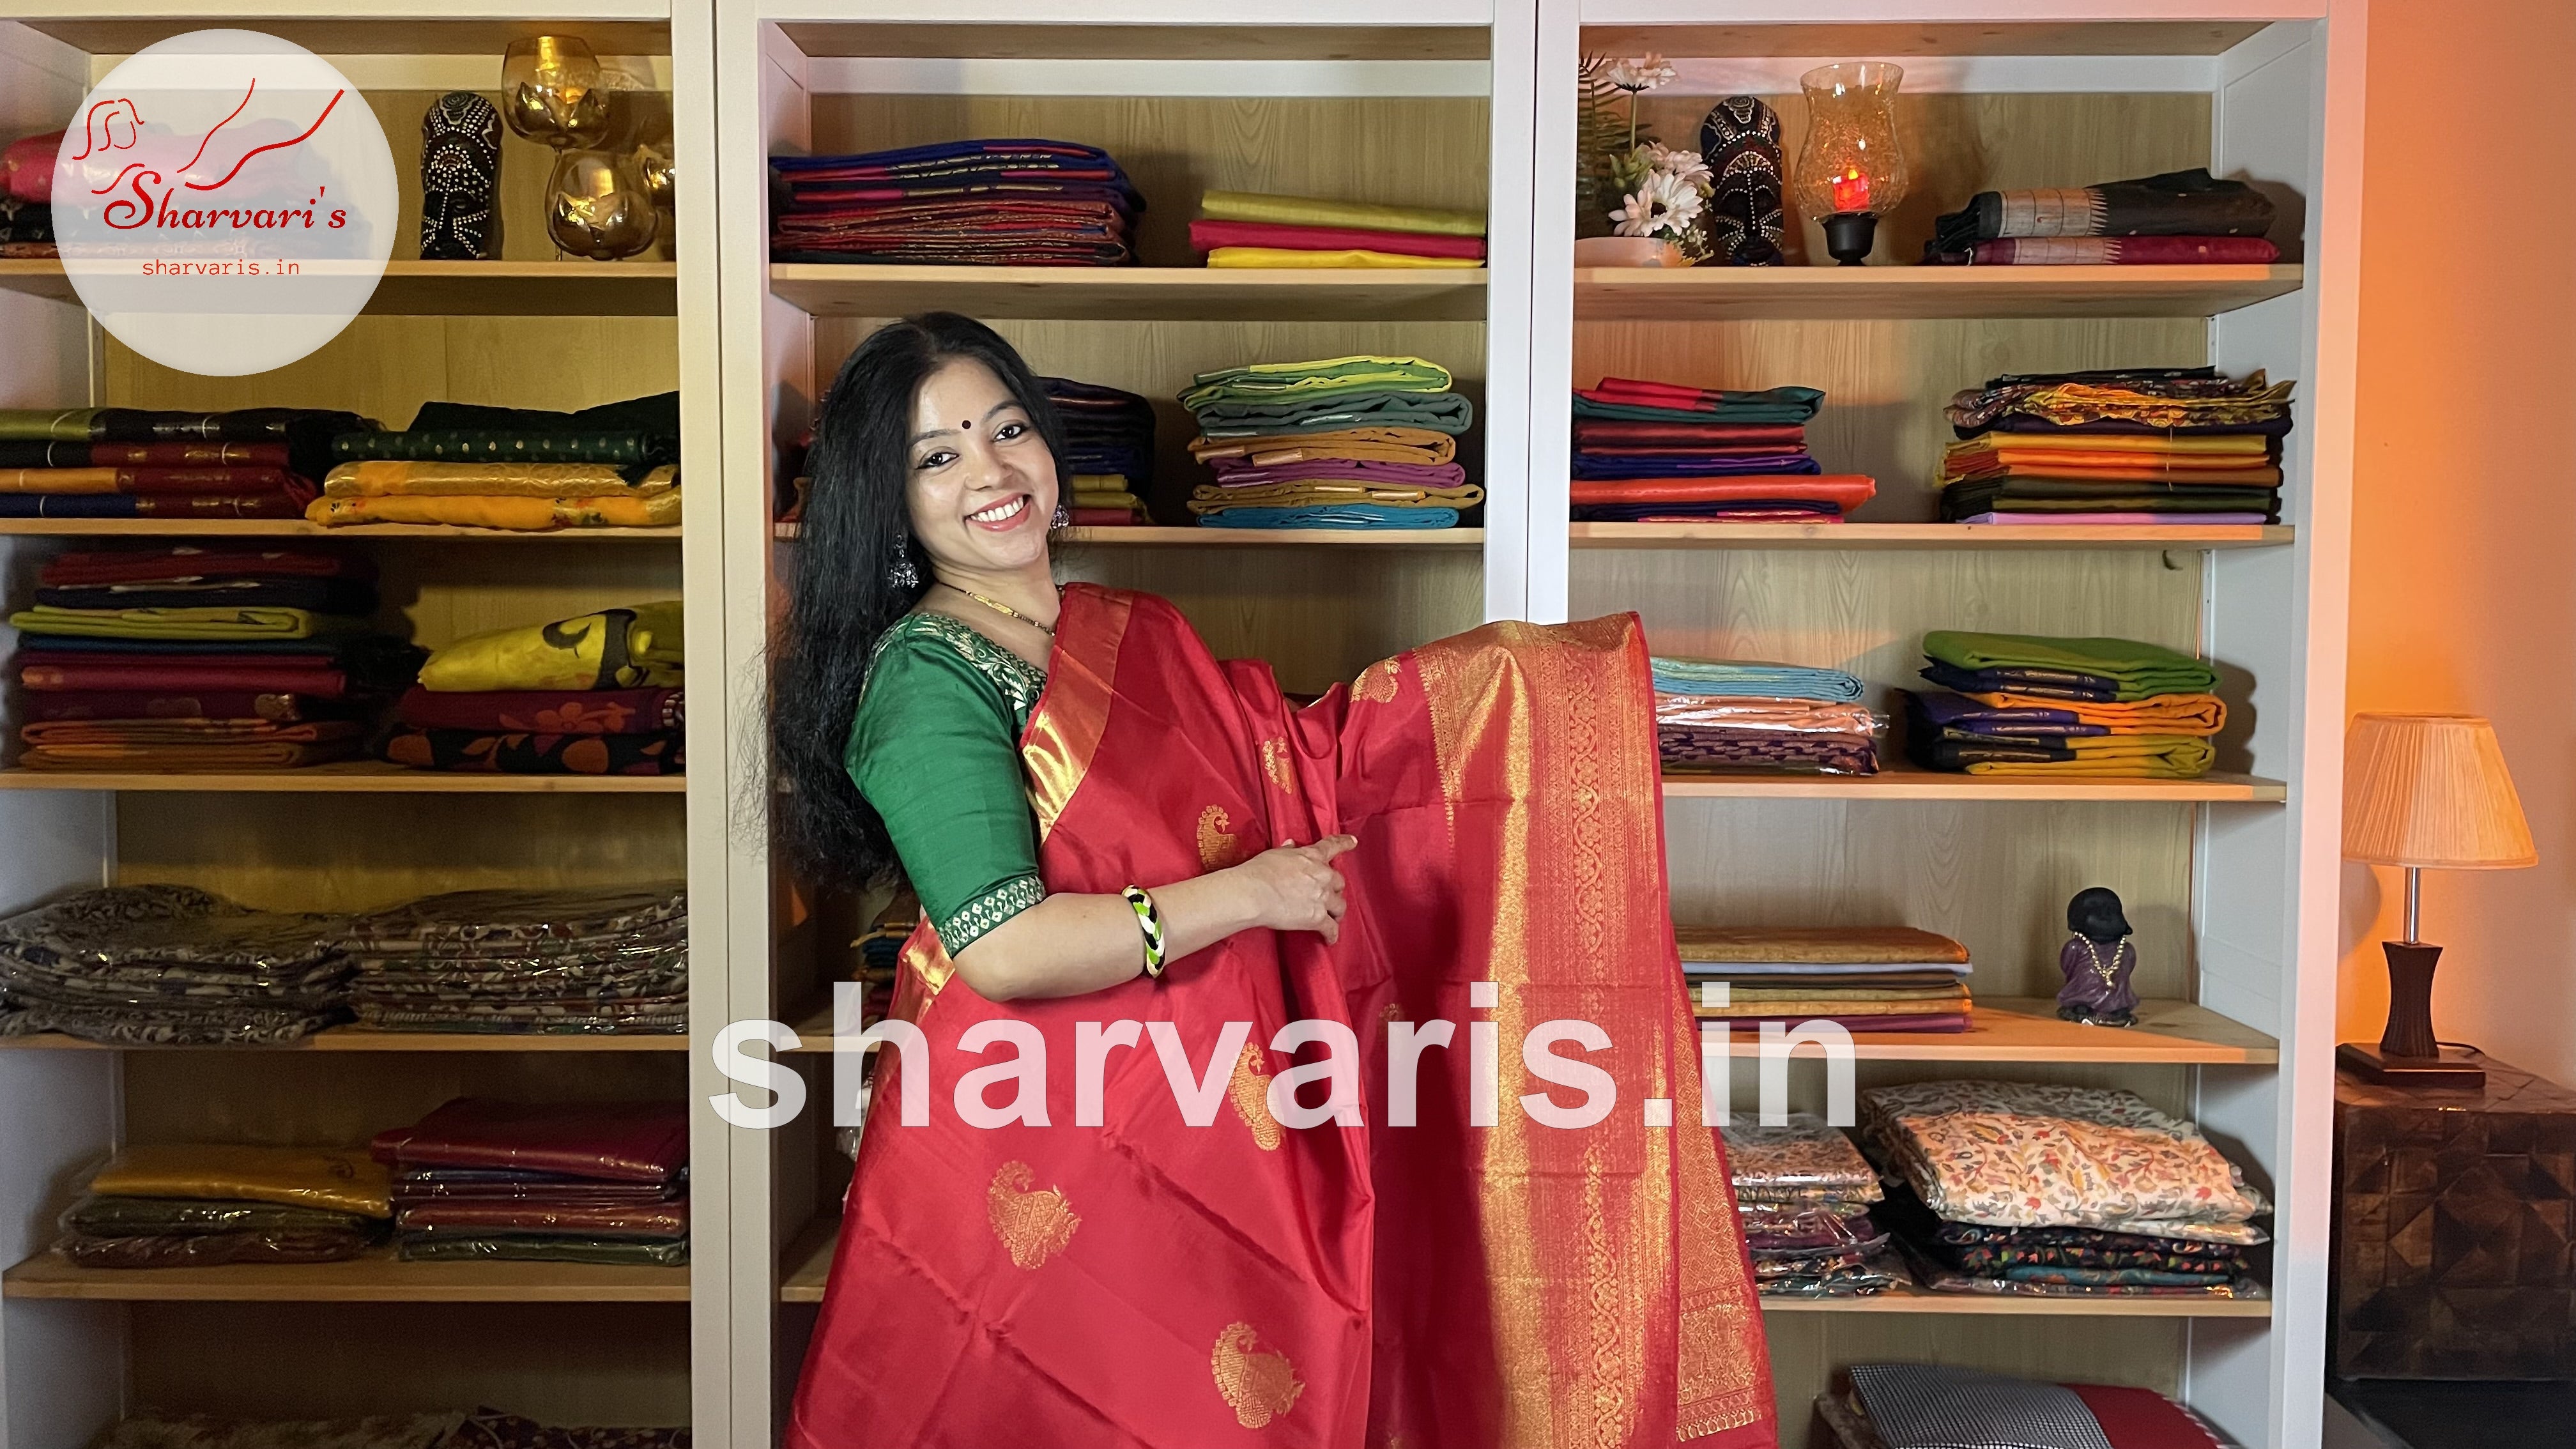 Kanjeevaram silk saree |1 gram gold zari border - Branded sarees